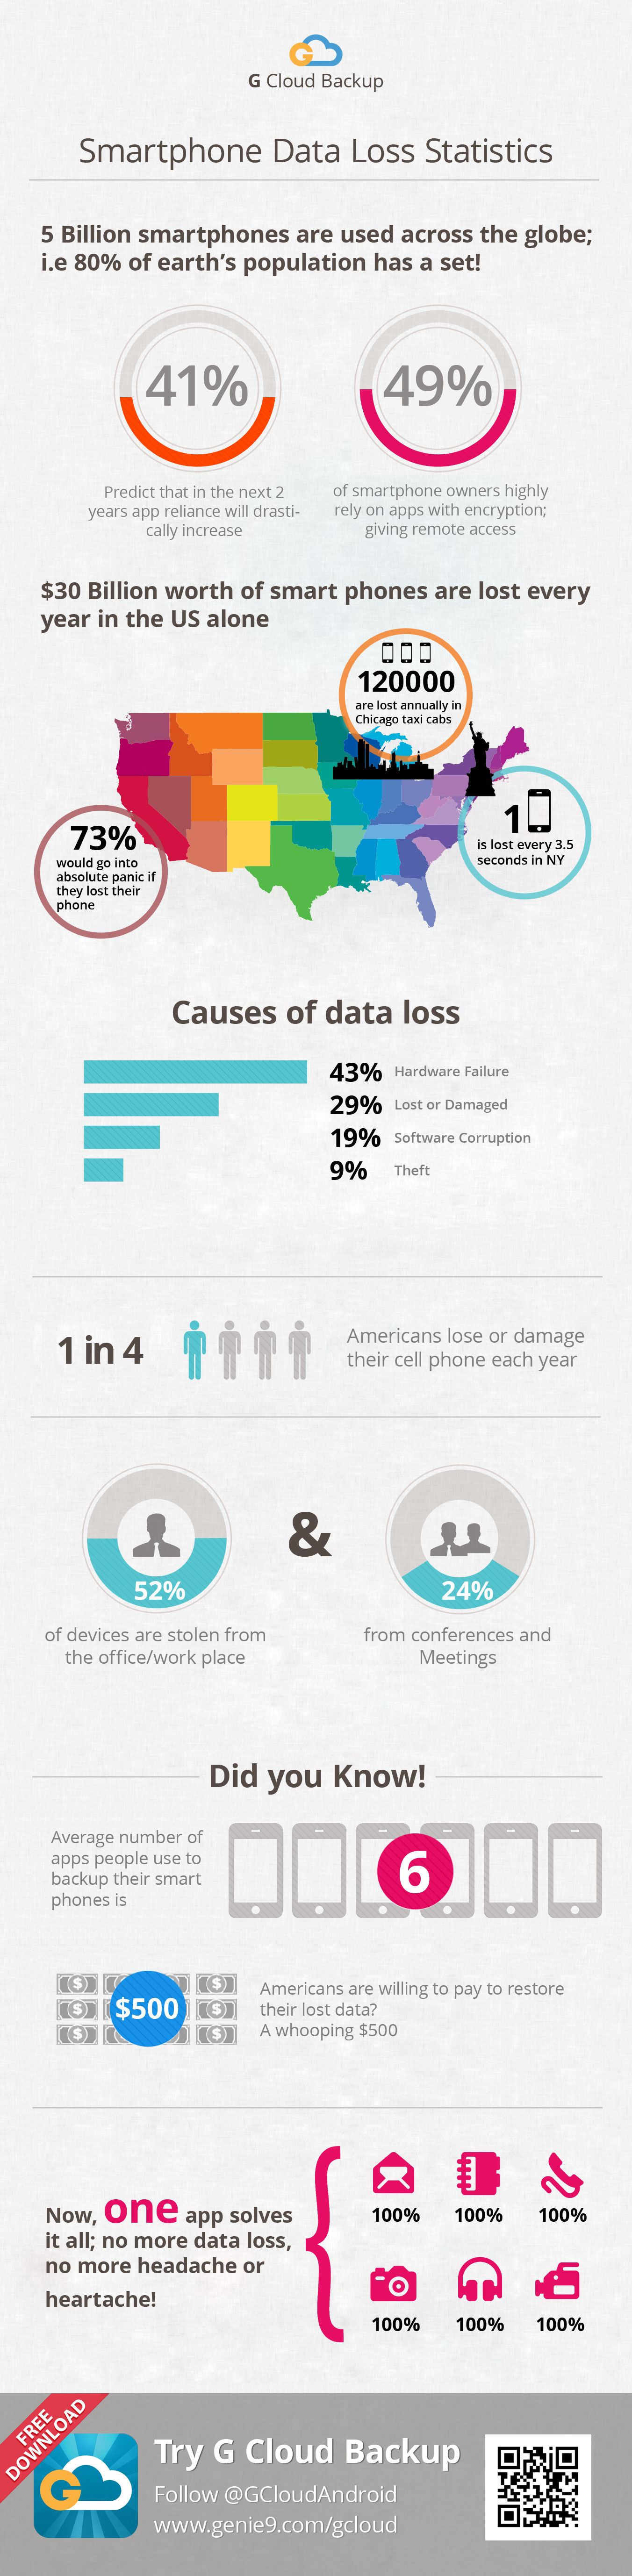 Smartphone Data Loss Statistics